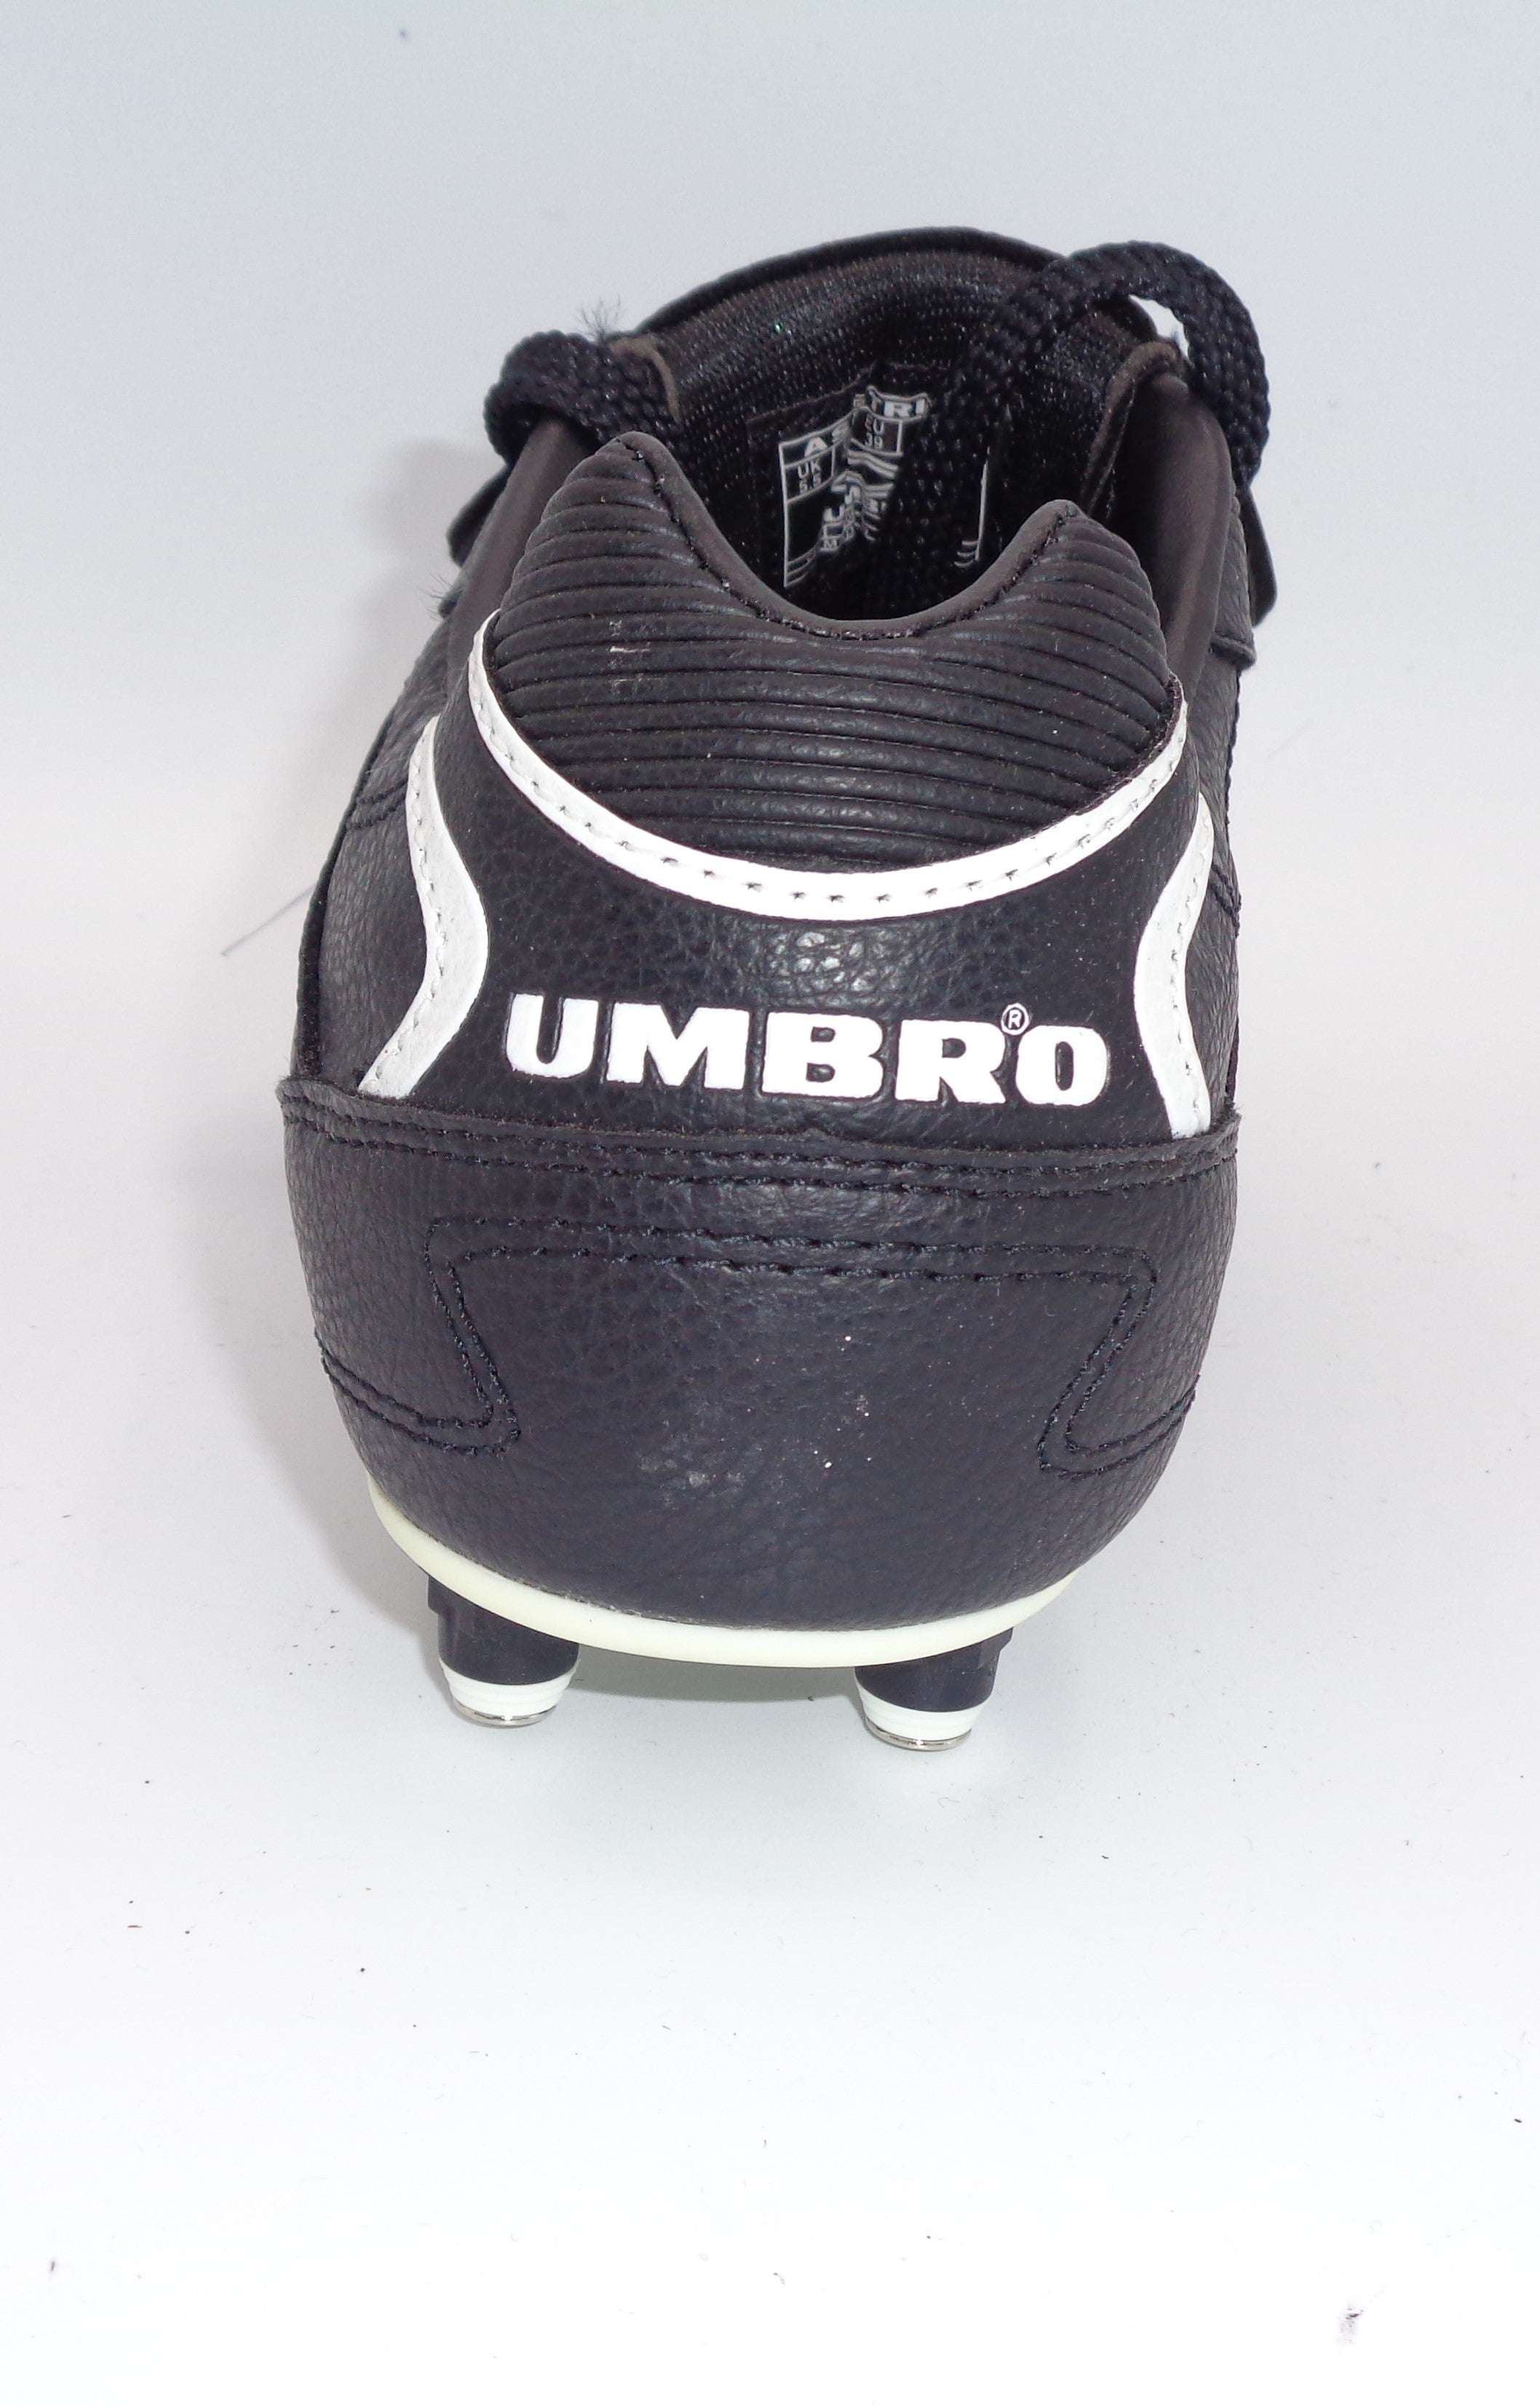 UMBRO AS STRIKE FOOTBALL BOOTS - UMBRO - SIZE 5.5